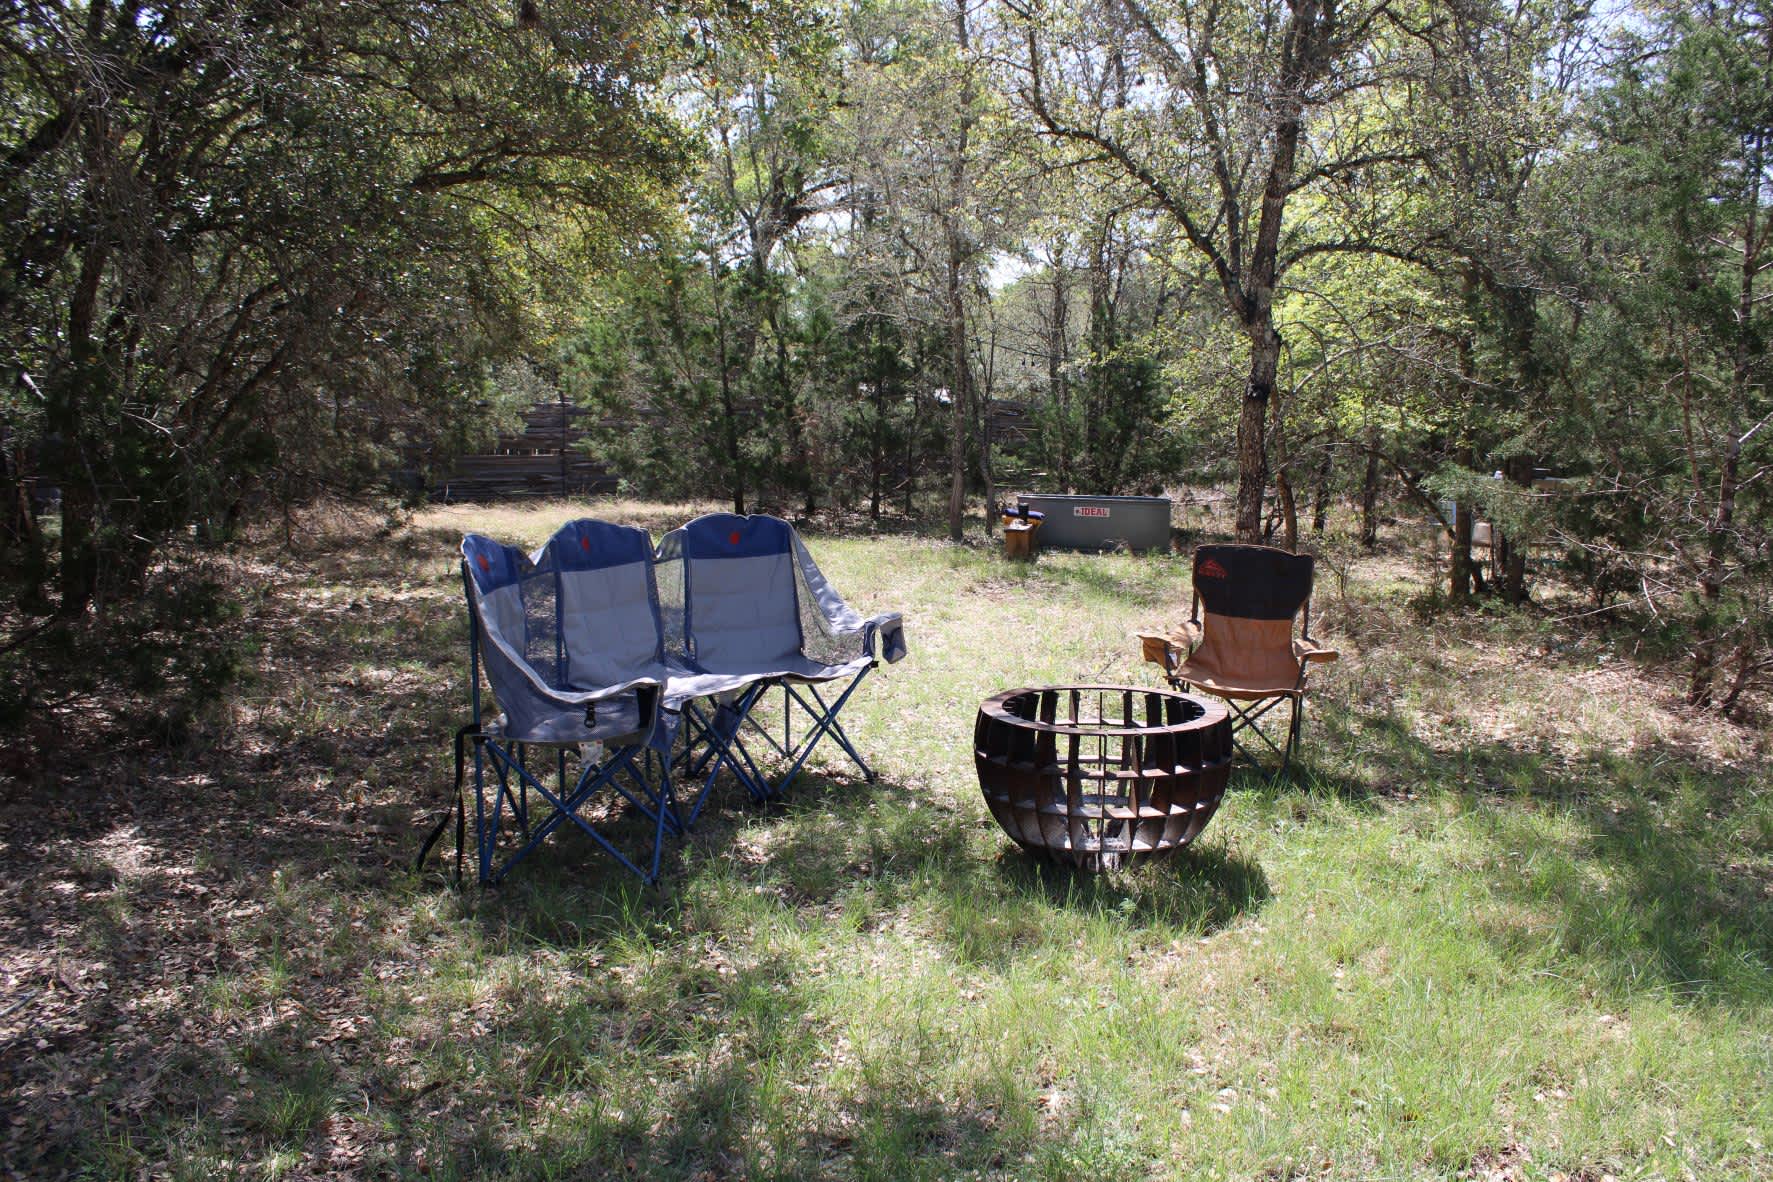 Easy Breeze - Hipcamp in Wimberley, Texas